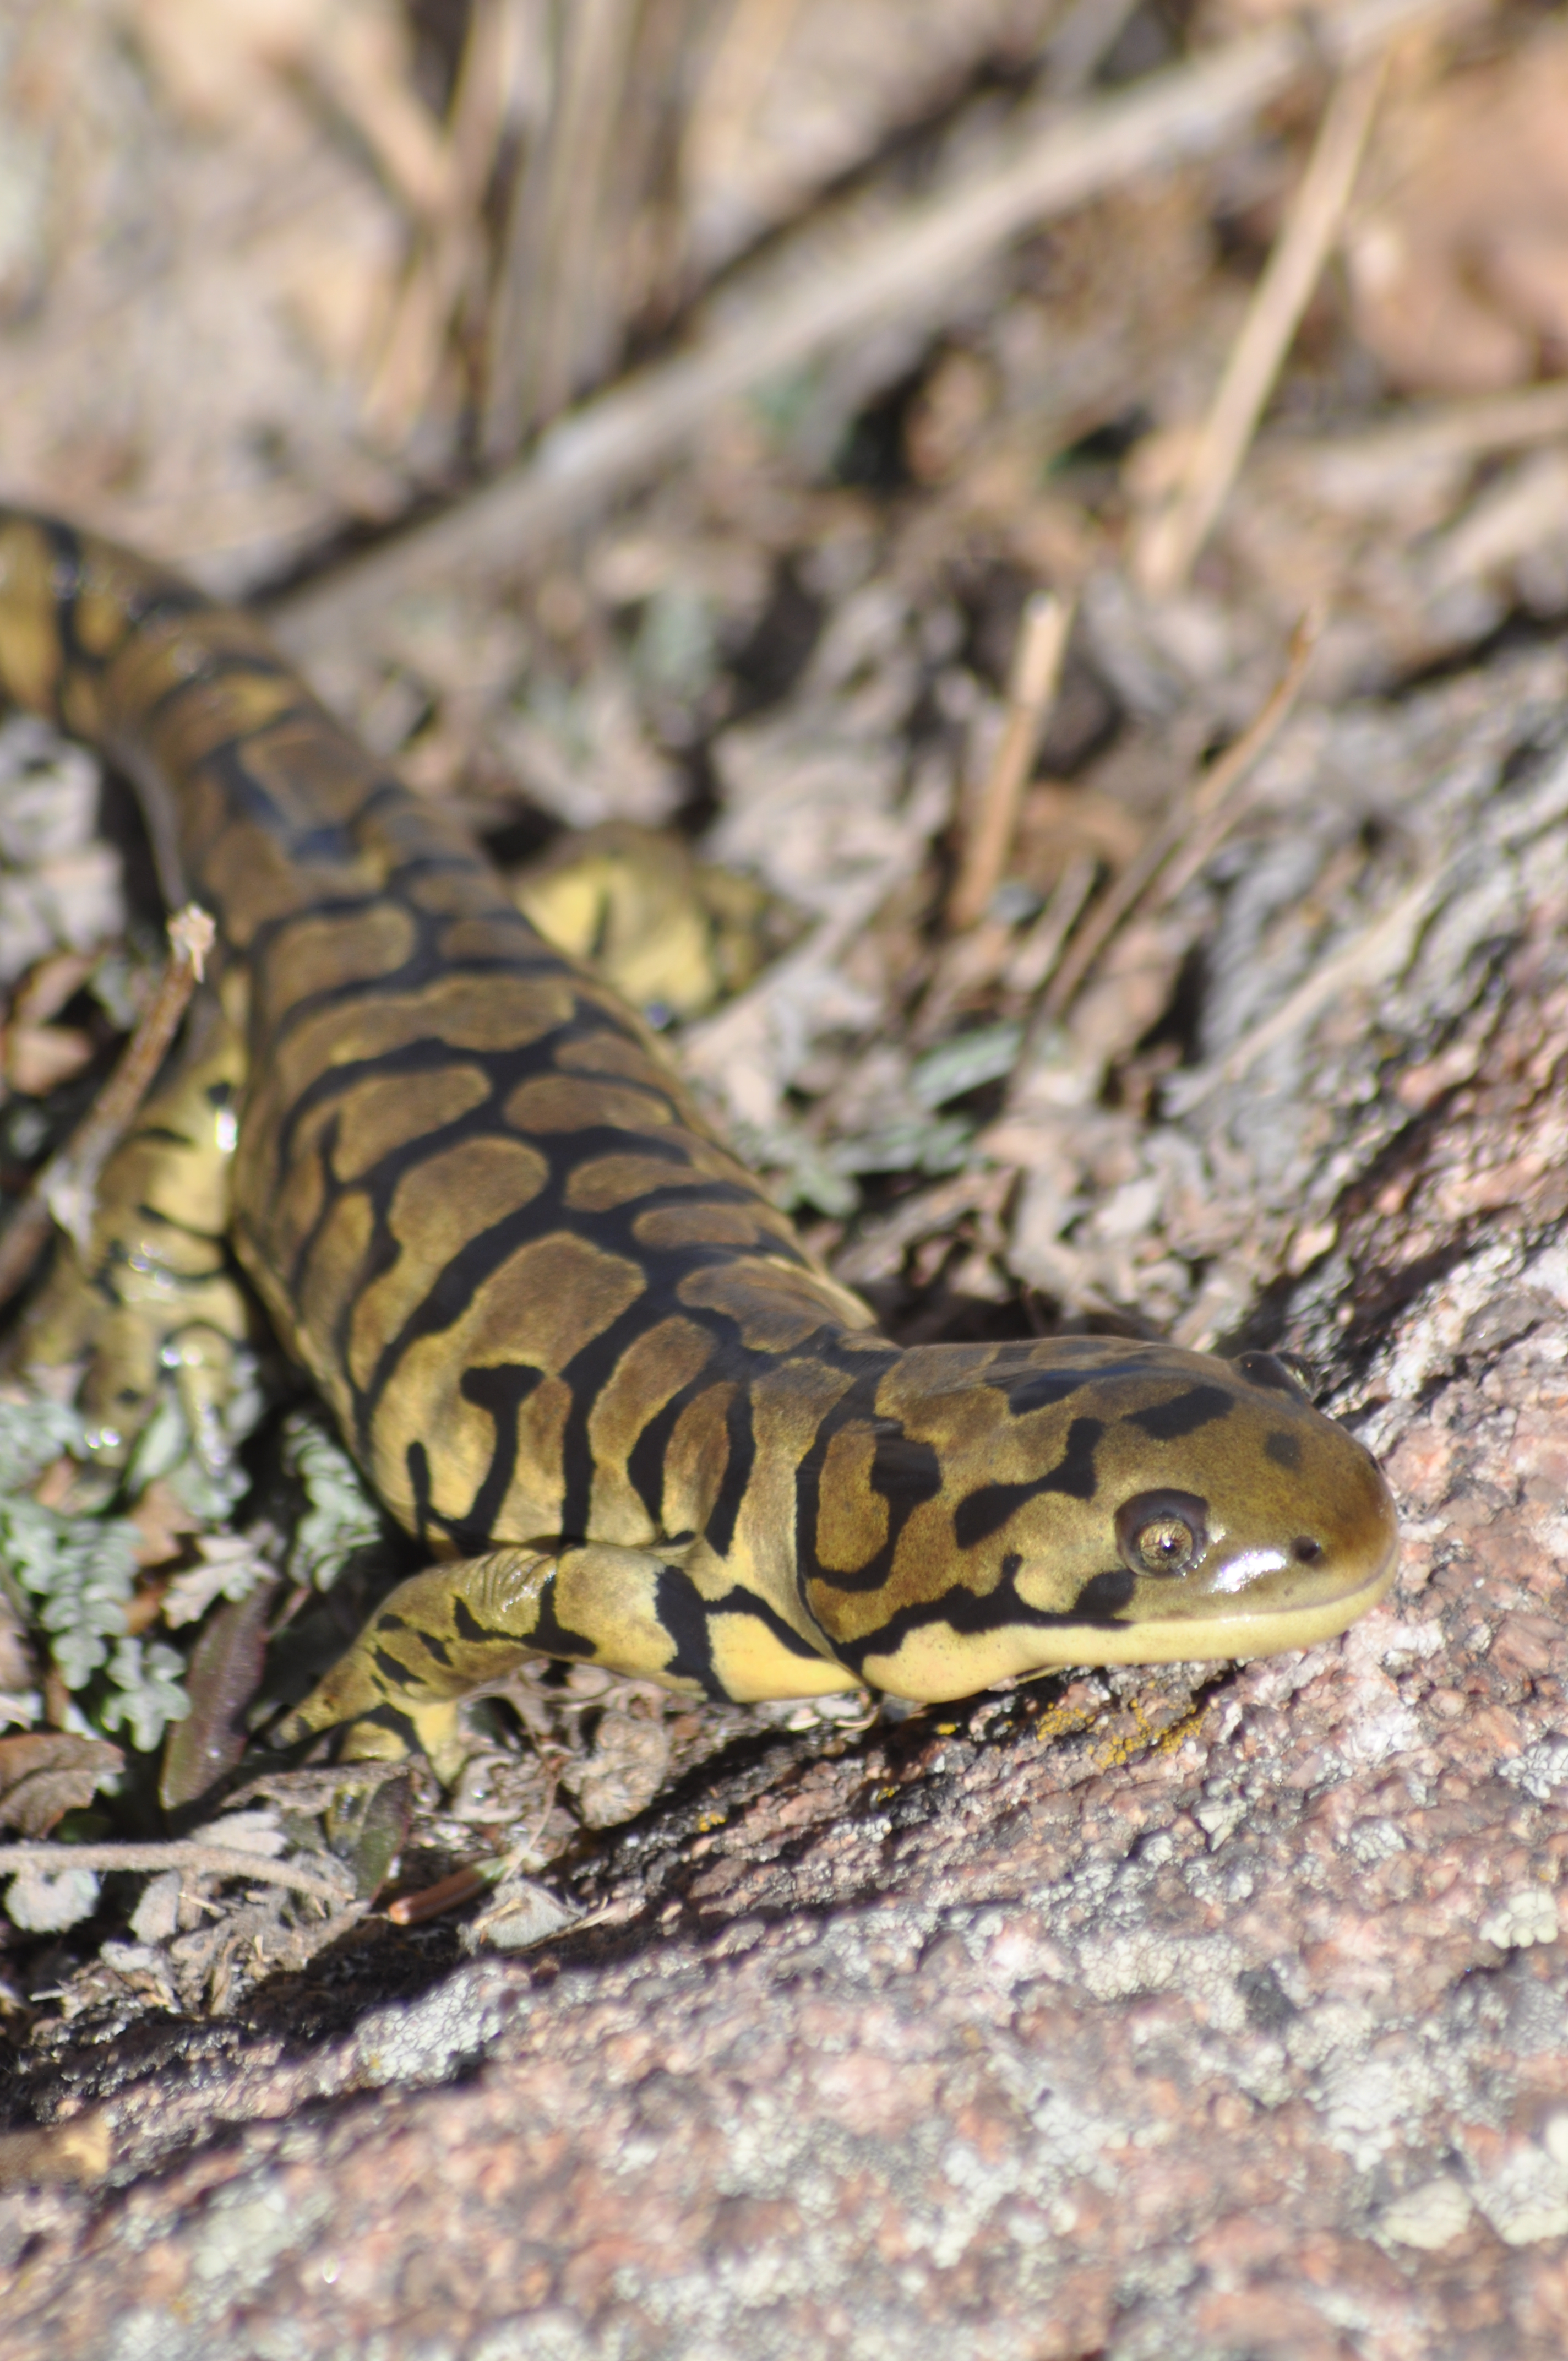 Tiger Salamander courtesy of Ian Abernethy